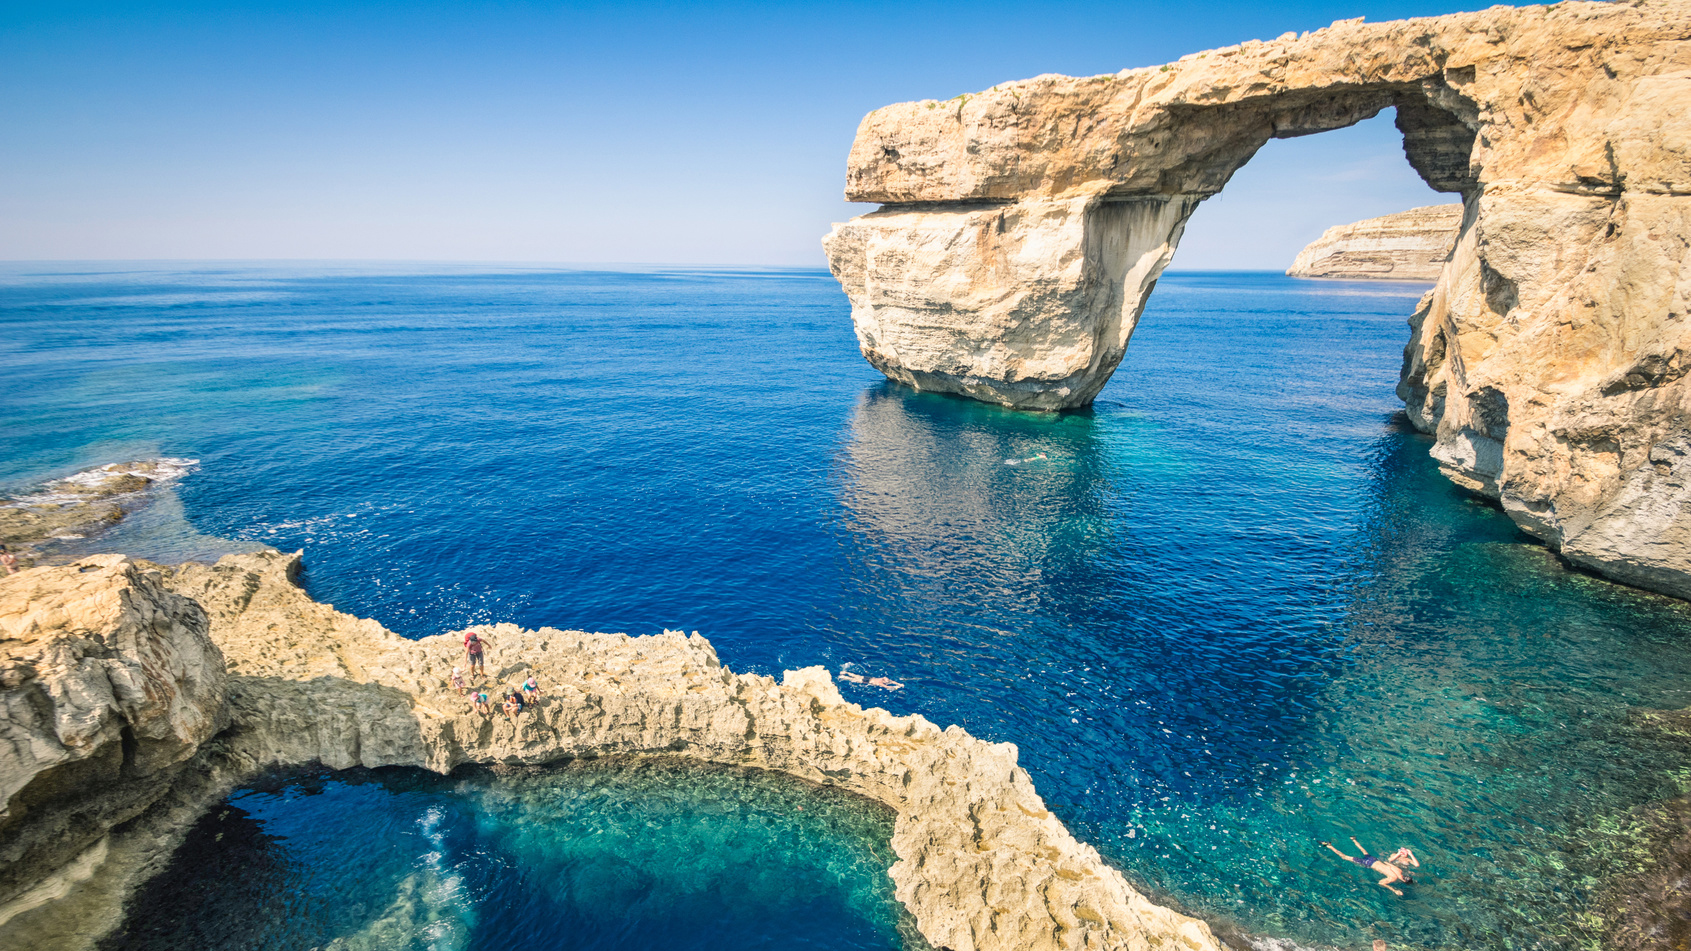 osszeomlott-malta-leghiresebb-latnivaloja-szikla-tengerpart-utazas-hotel-szallas-hajozashu